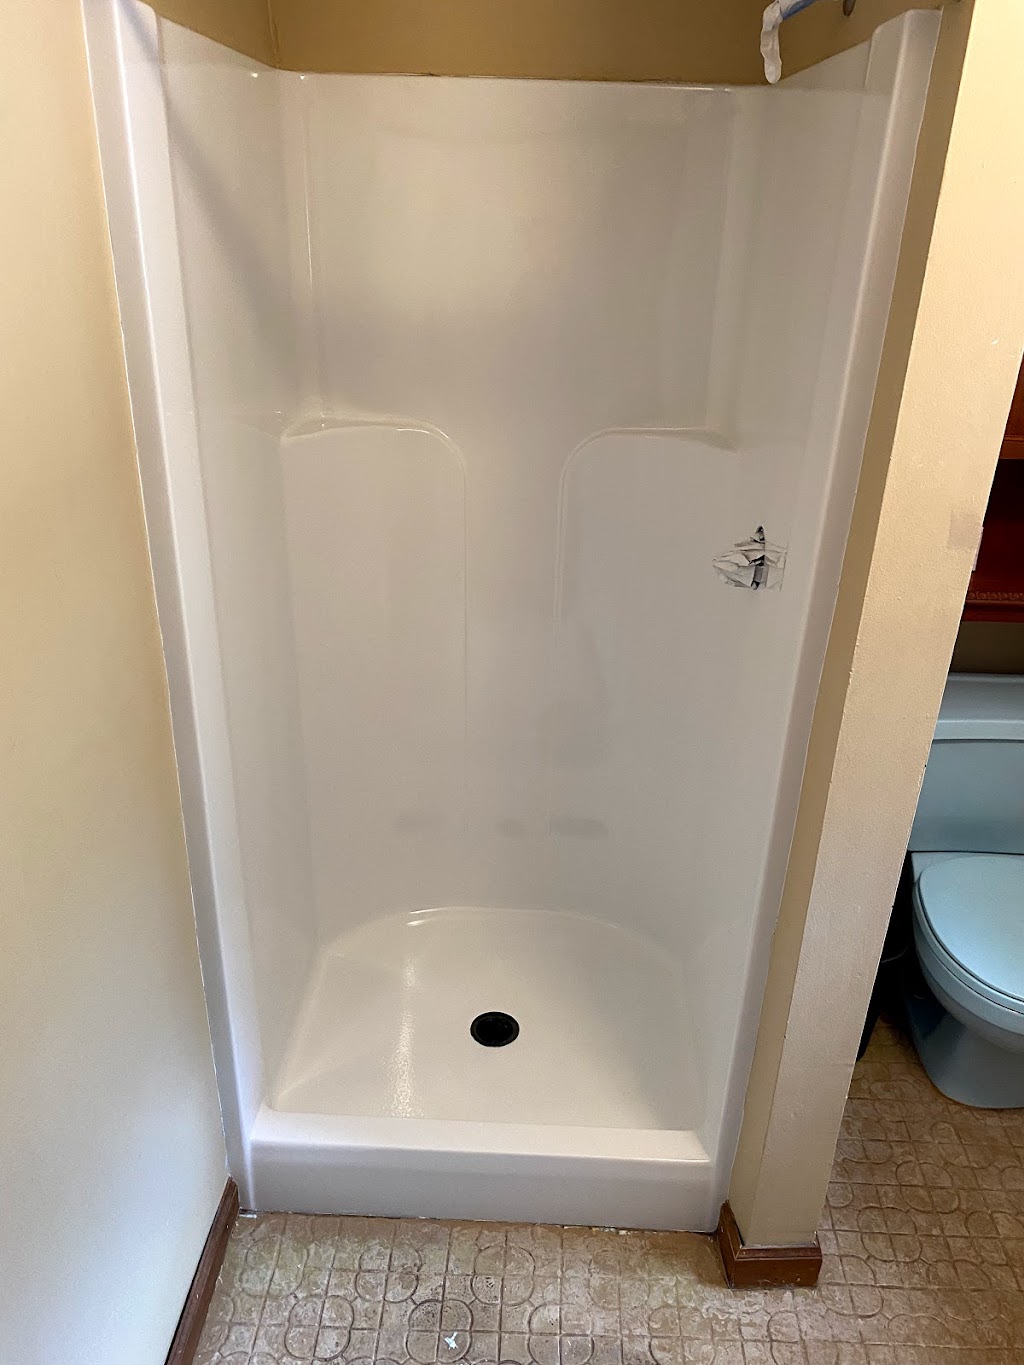 Andre’s Bathtub Refinishing & Cleaning CT | 51 Brook St, Naugatuck, CT 06770 | Phone: (203) 490-5250